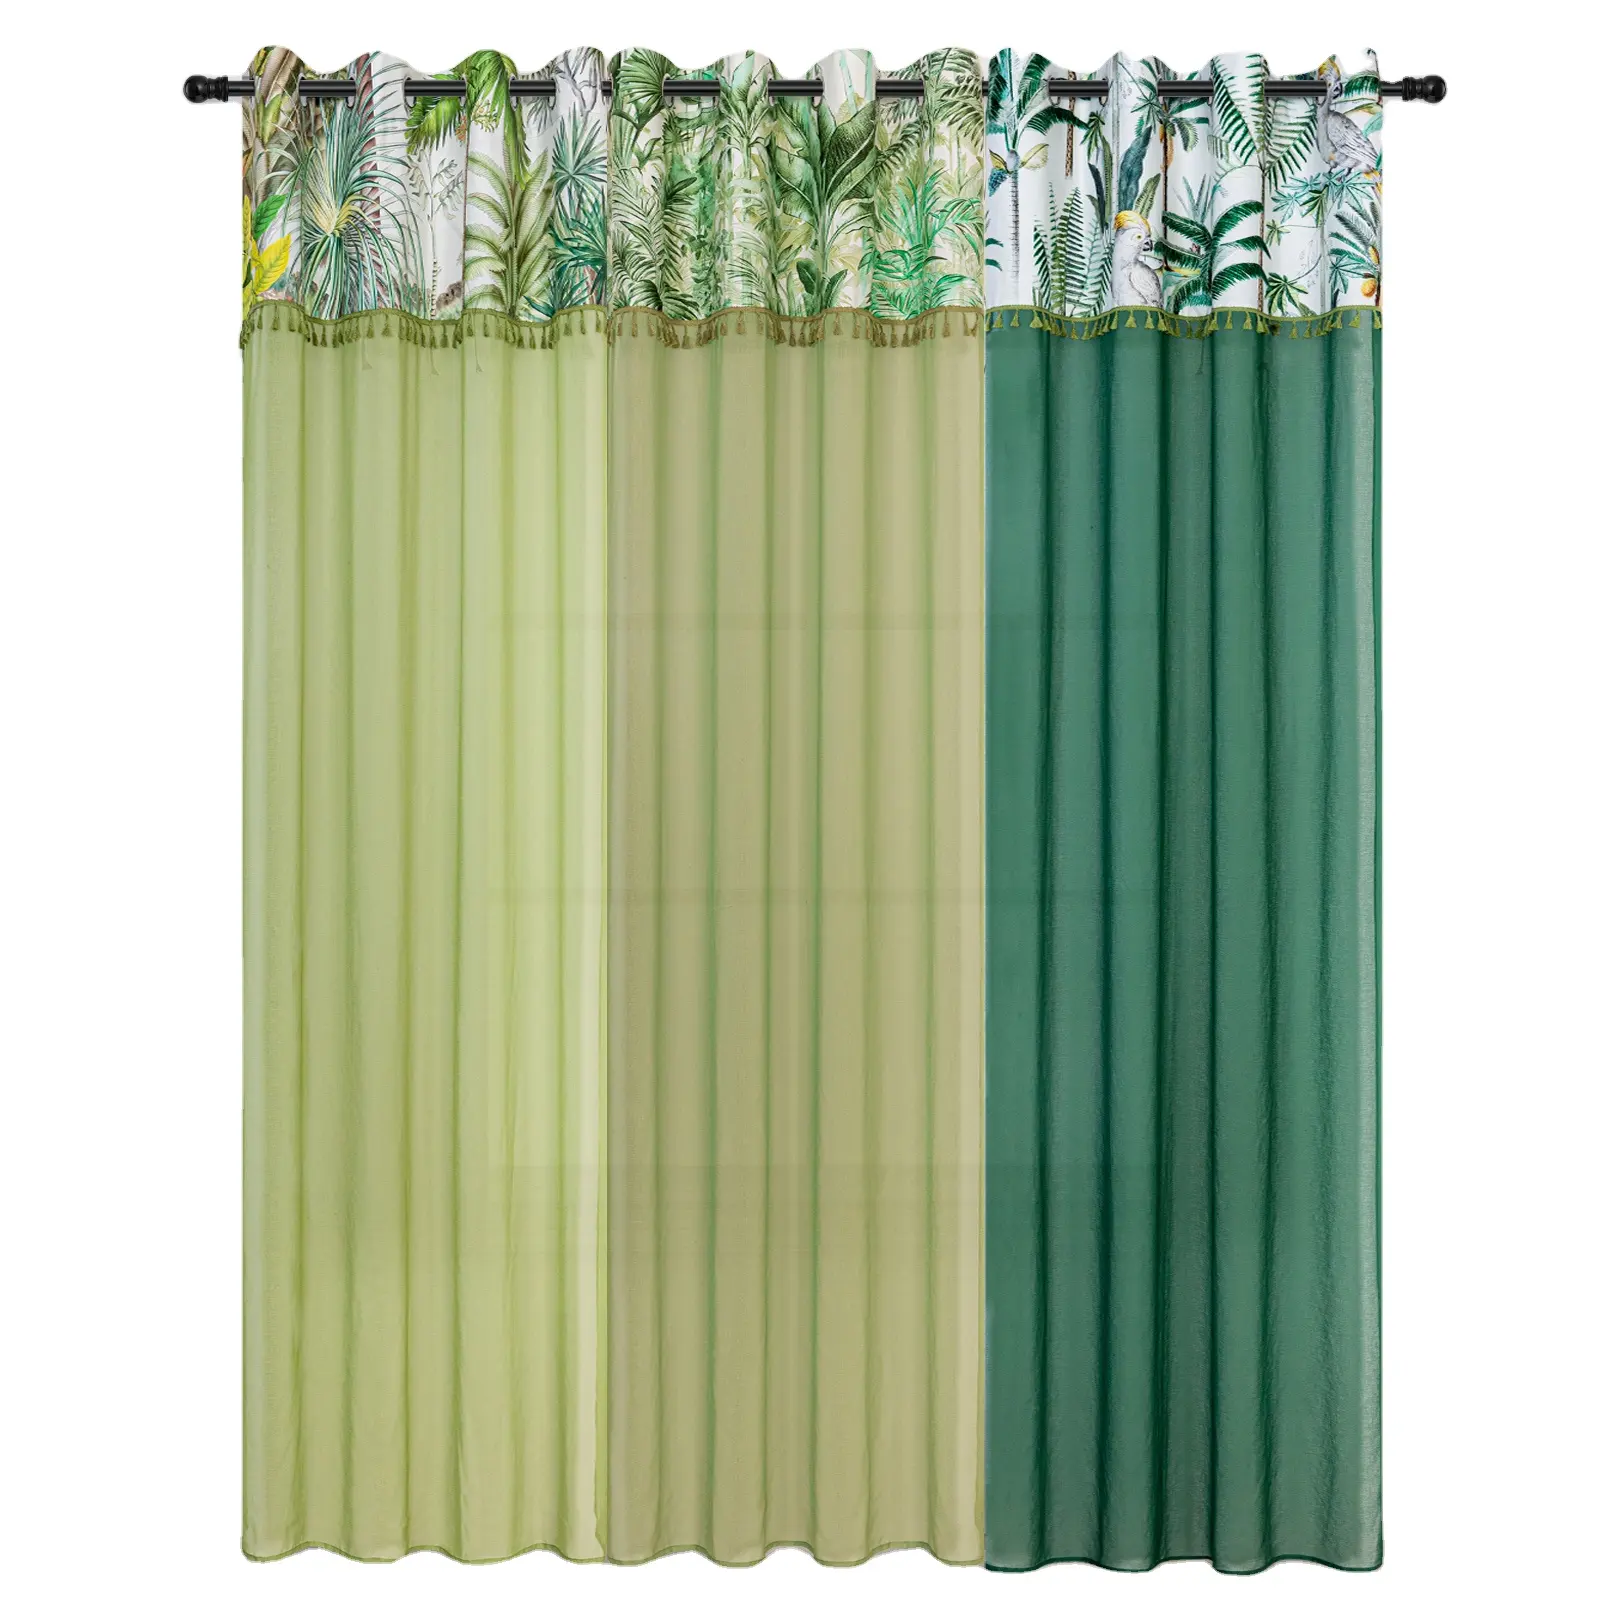 Ltaly Style Romantic Window Curtain Printed White Green Velvet Sheer Splicing Curtain For livingroom